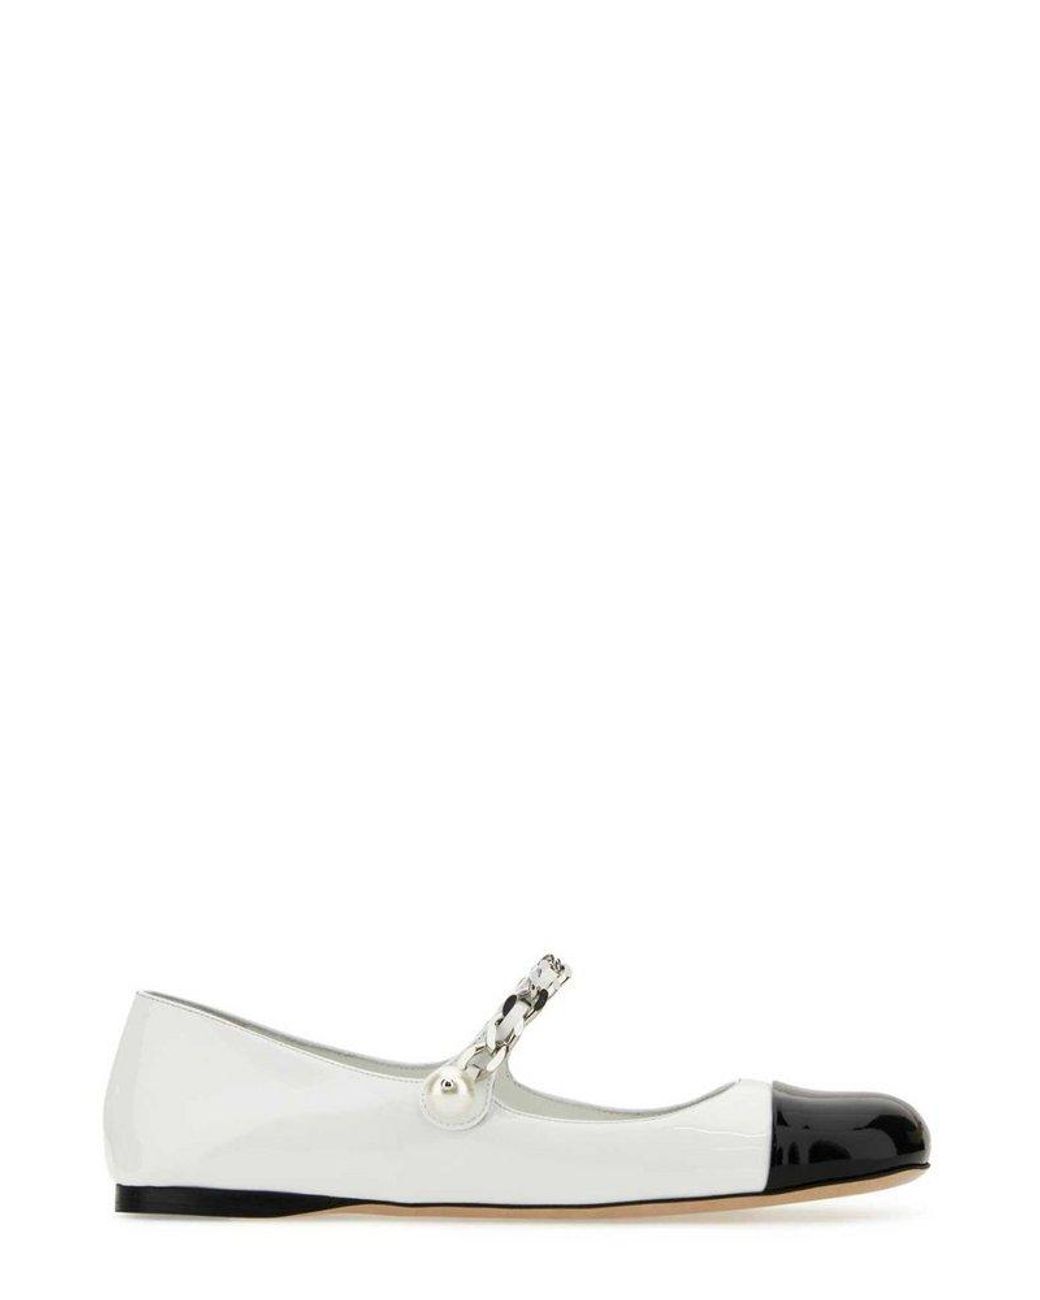 Miu Miu Two-toned Flat Shoes in White | Lyst